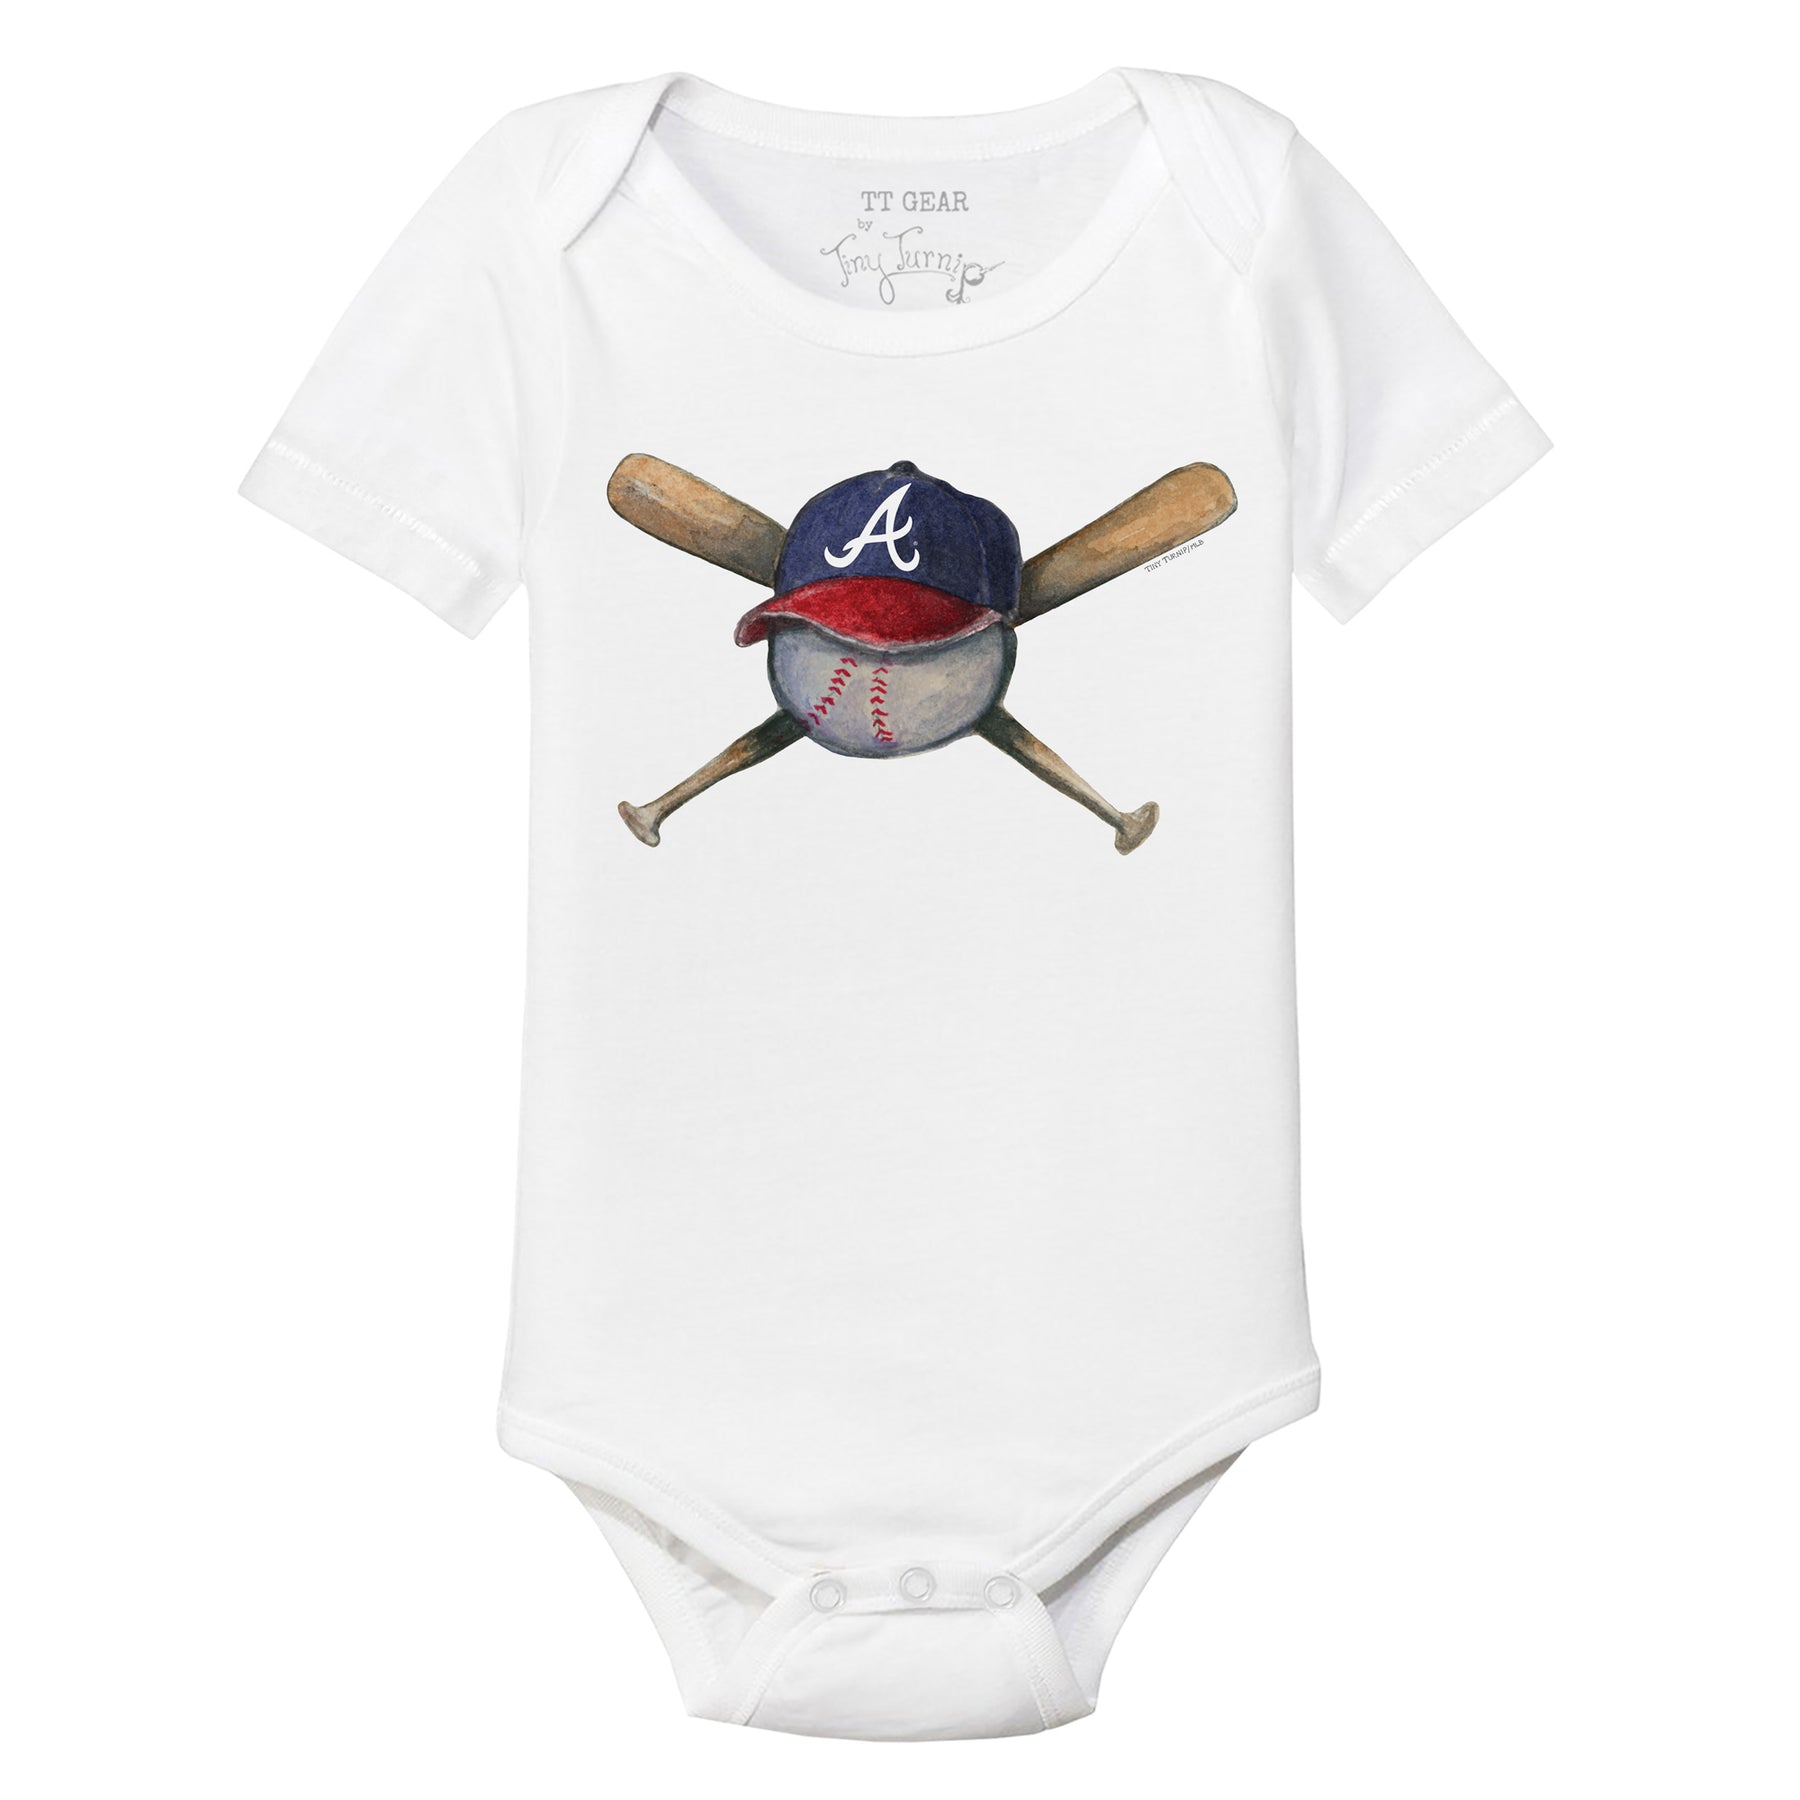 Infant Tiny Turnip White Atlanta Braves TT Rex T-Shirt